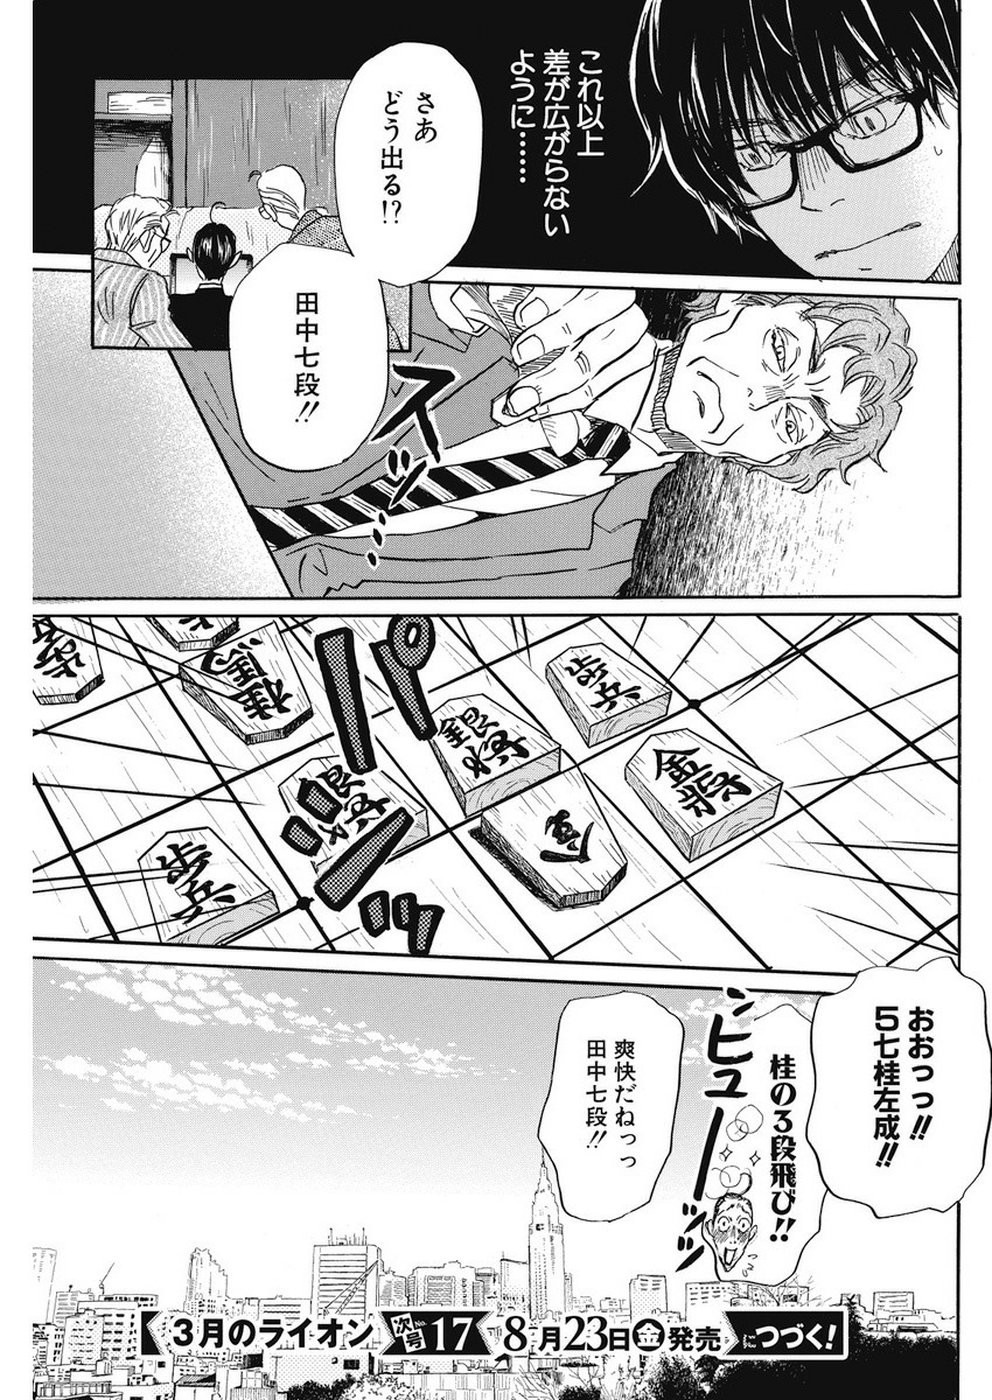 3 Gatsu no Lion - Chapter 162 - Page 9